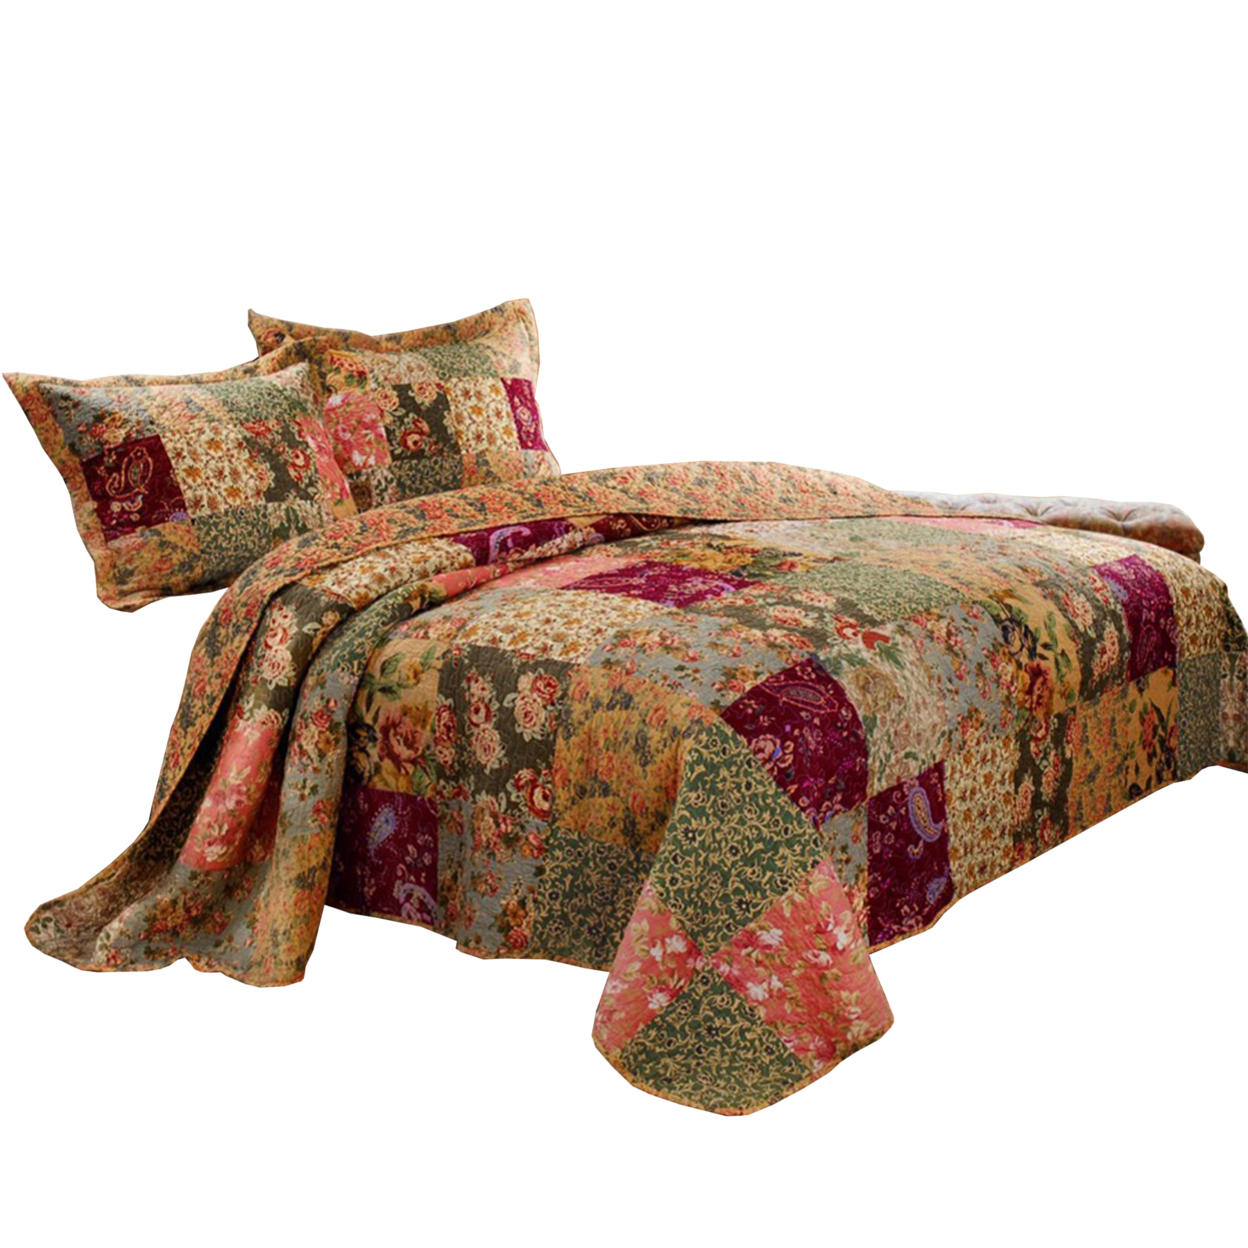 Kamet 3 Piece Fabric King Size Bedspread Set With Floral Prints, Multicolor- Saltoro Sherpi